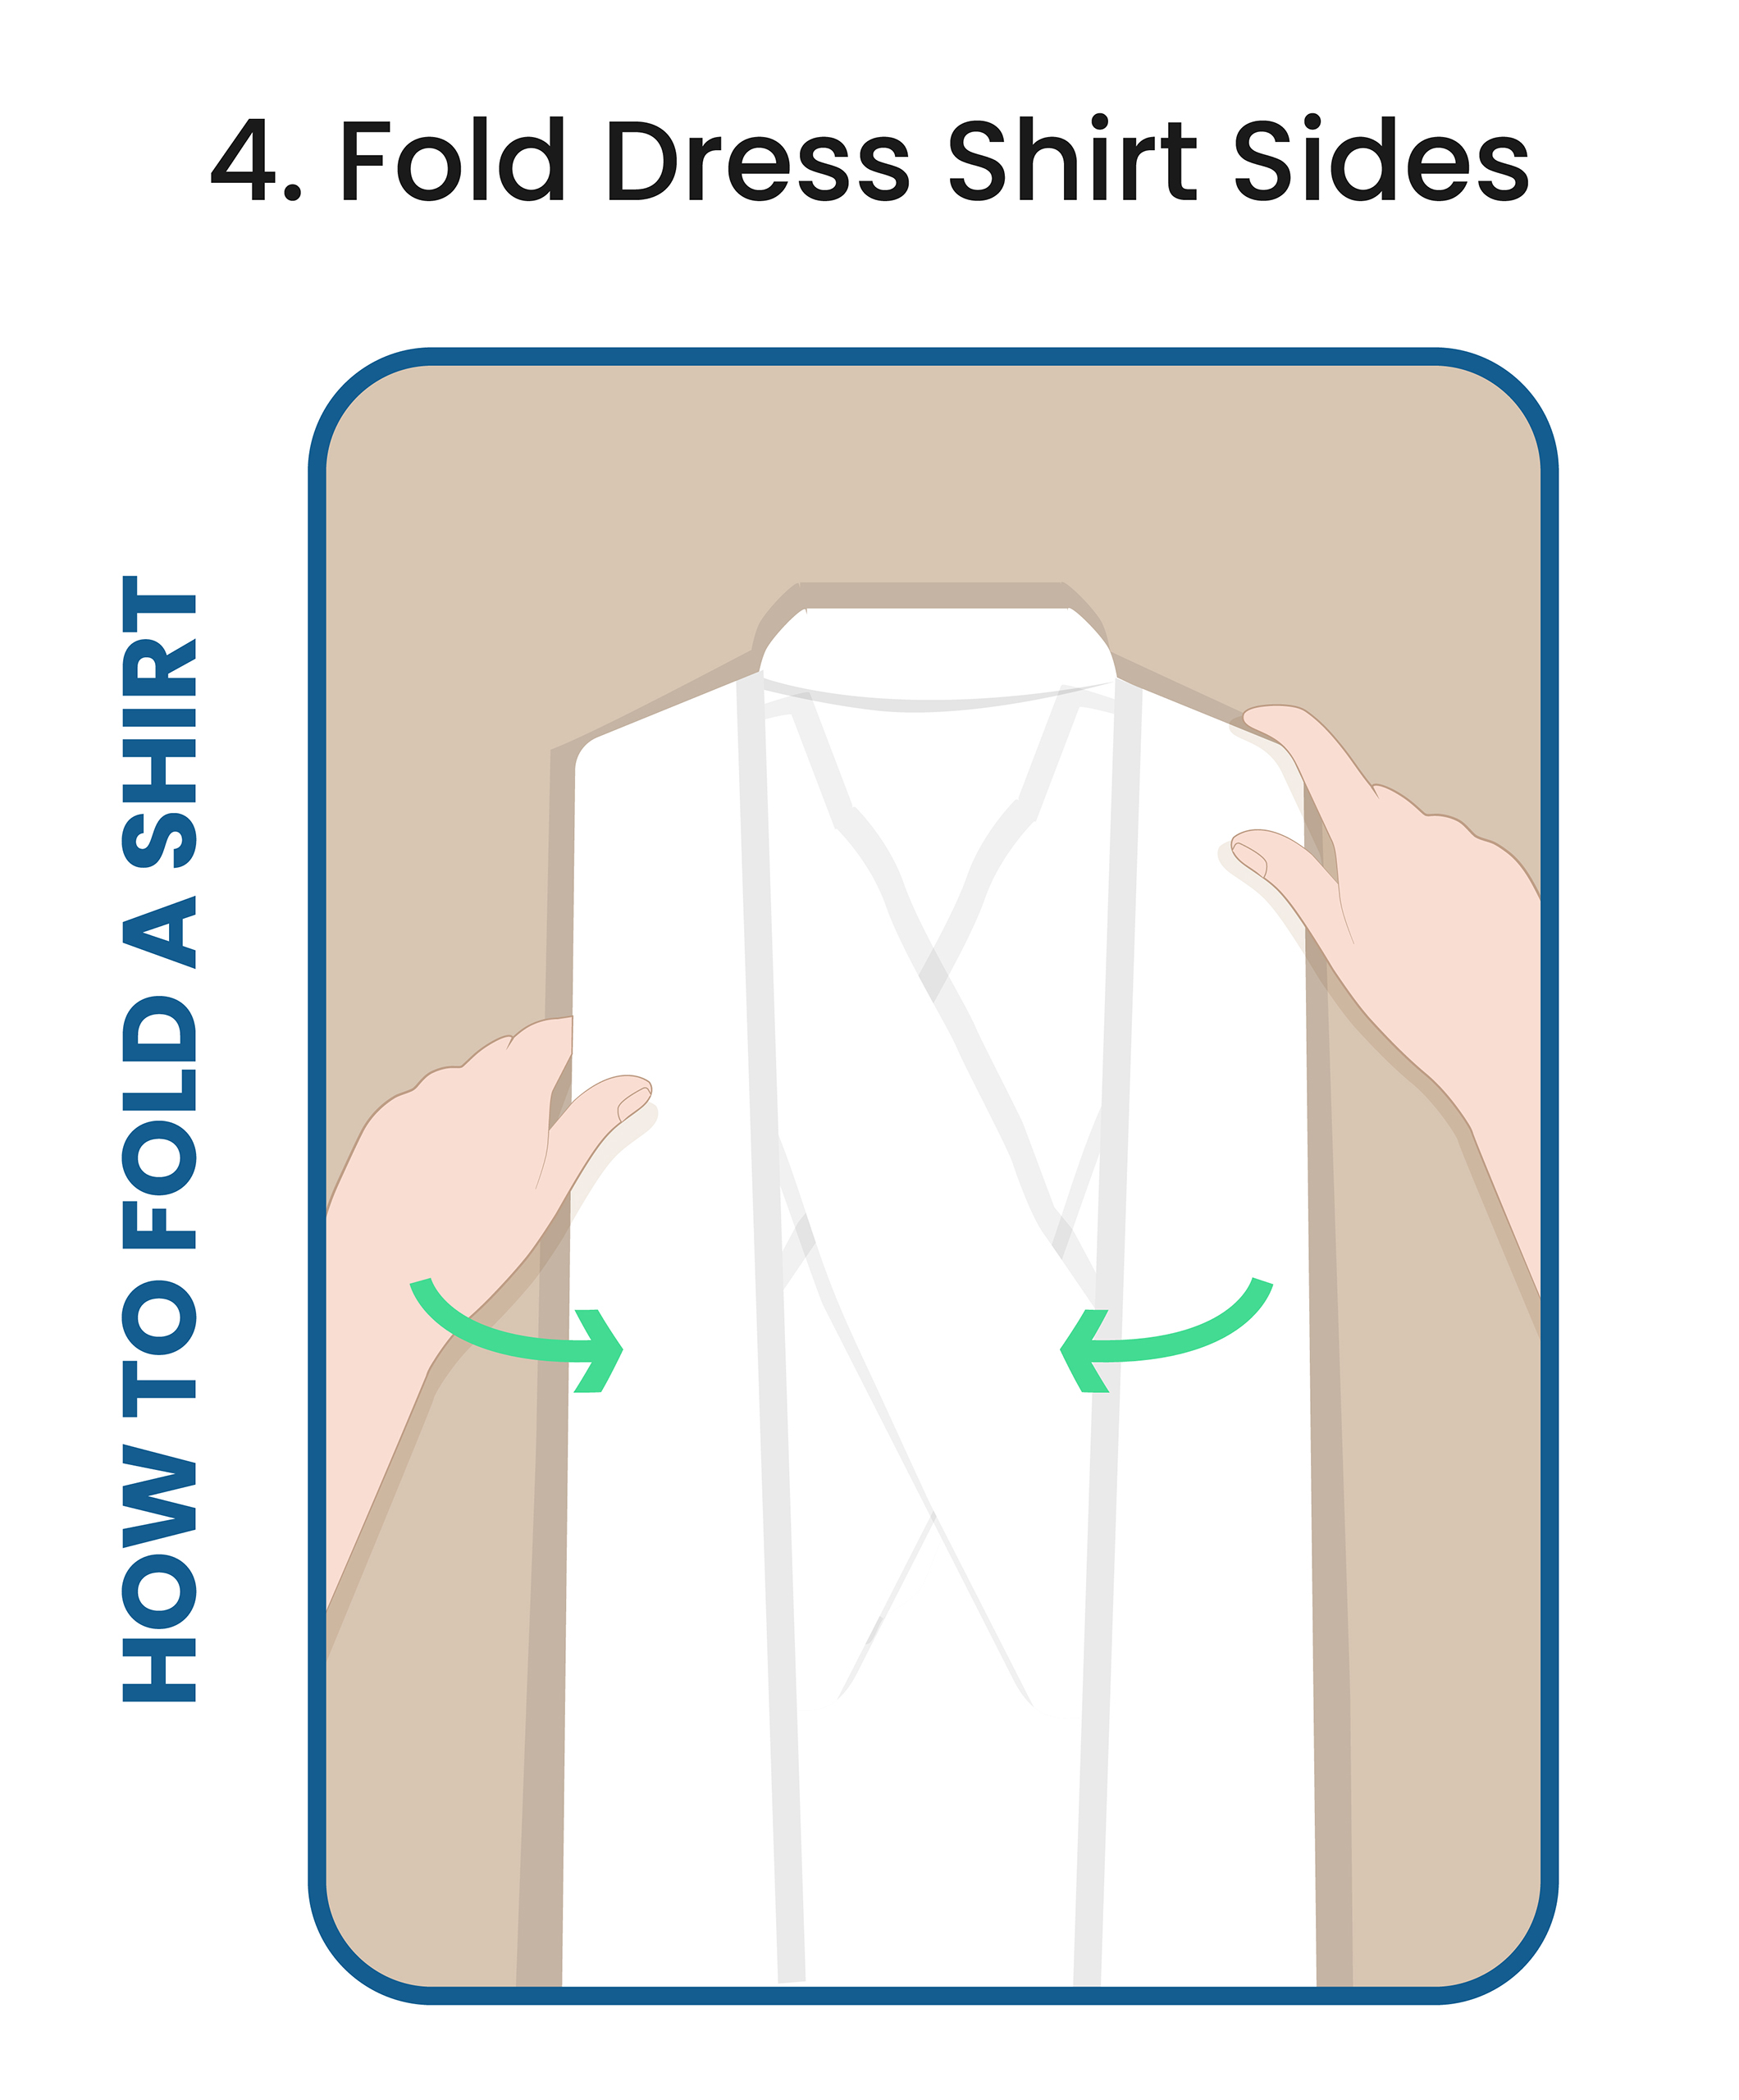 folding both dress shirt sides